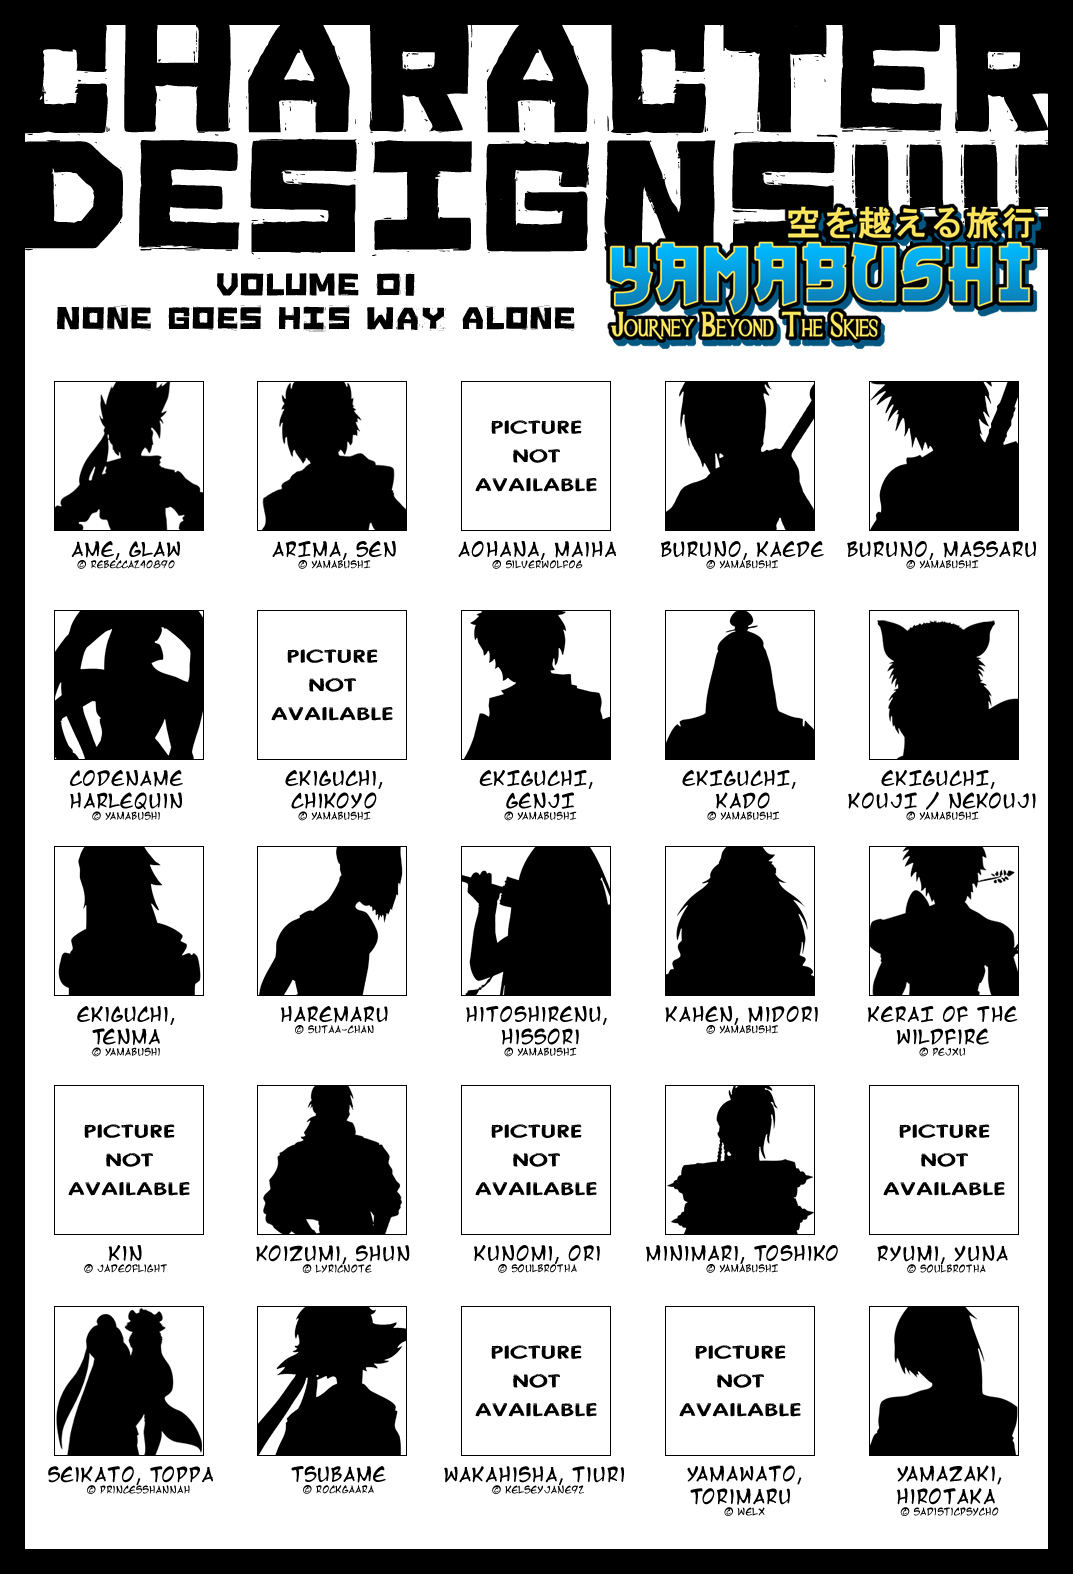 Character List - Volume 01 by YamabushiJBS on DeviantArt